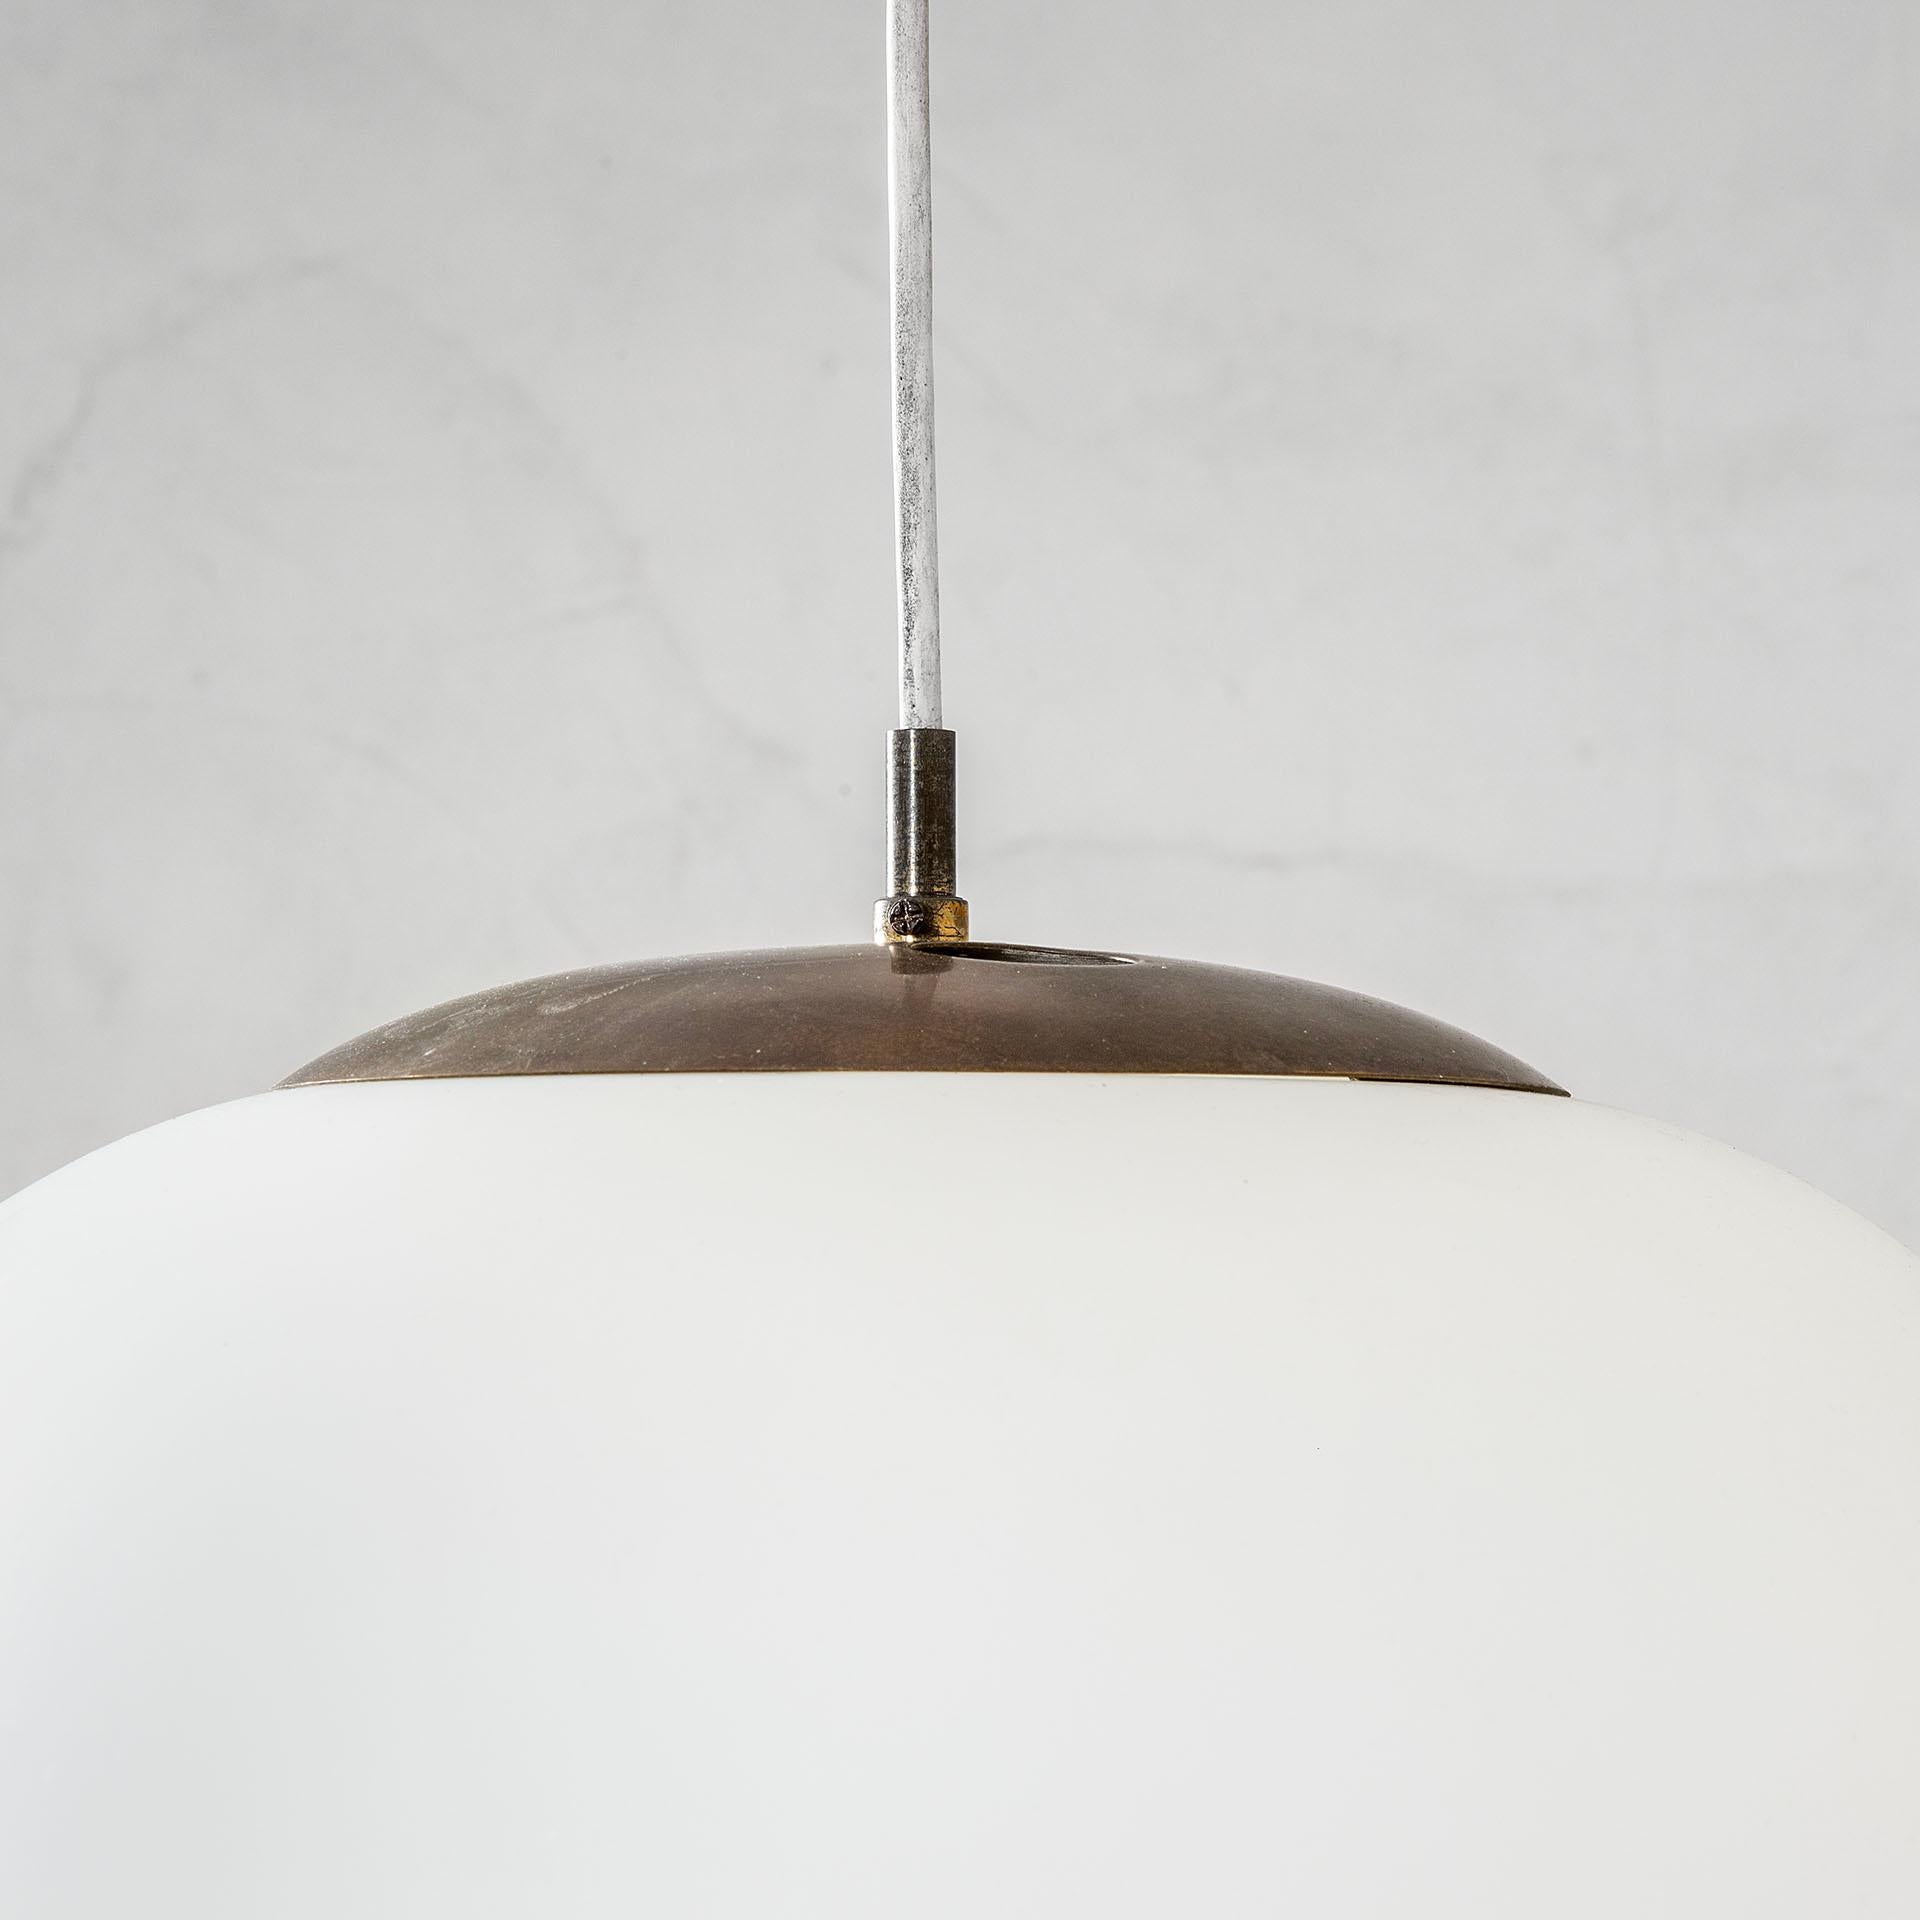 Italian 20th Century Stilnovo Pendant Lamp in White Opaline Glass and Brass Details, 50s For Sale